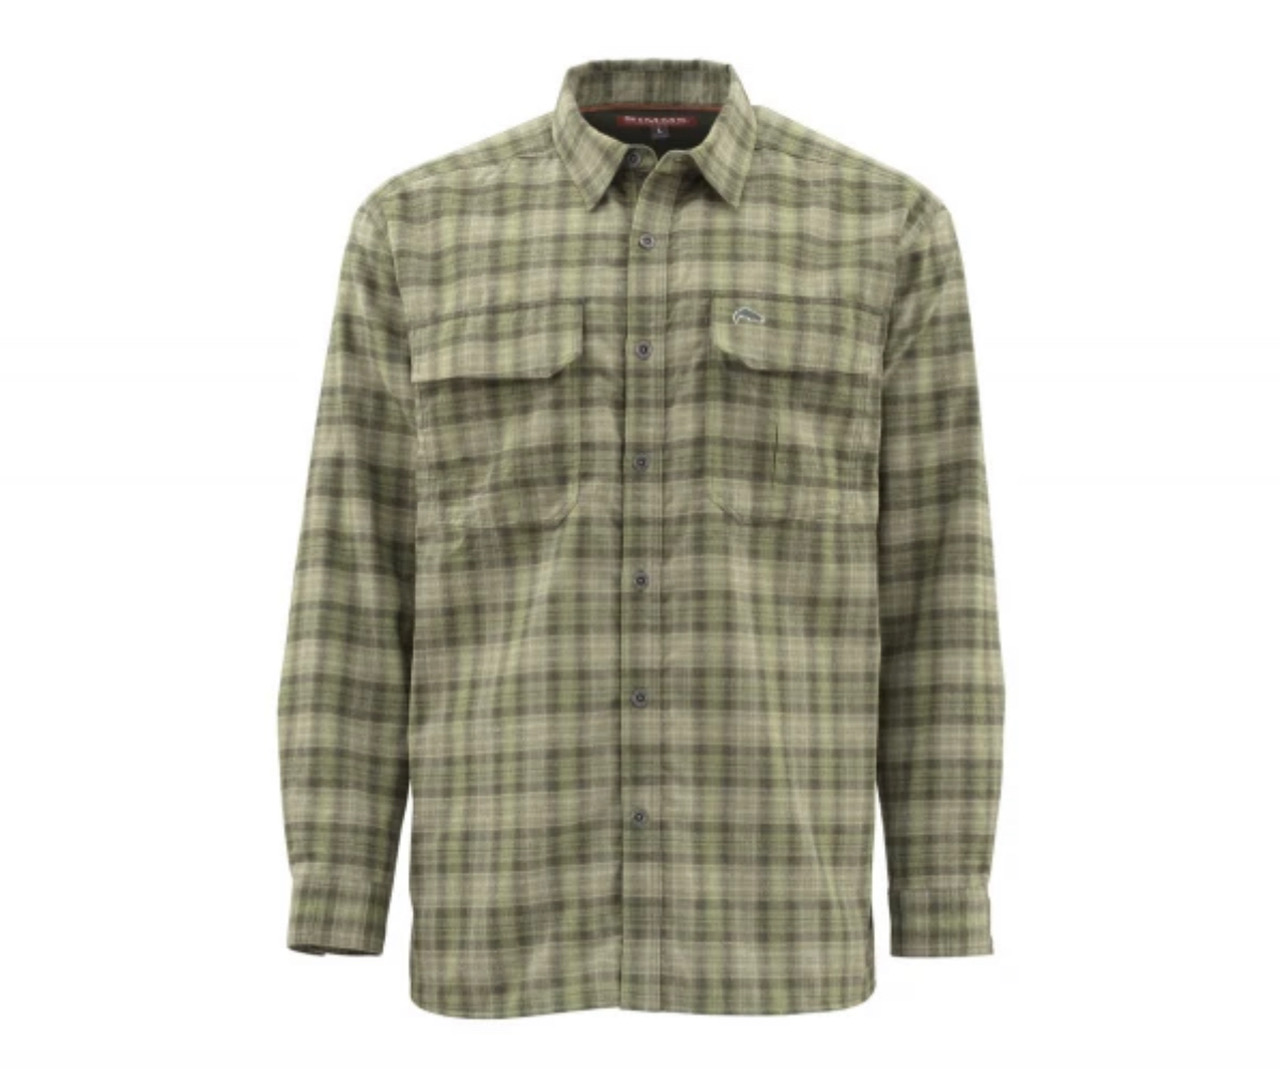 Simms M's Coldweather L/S Shirt - Covert Plaid - XL